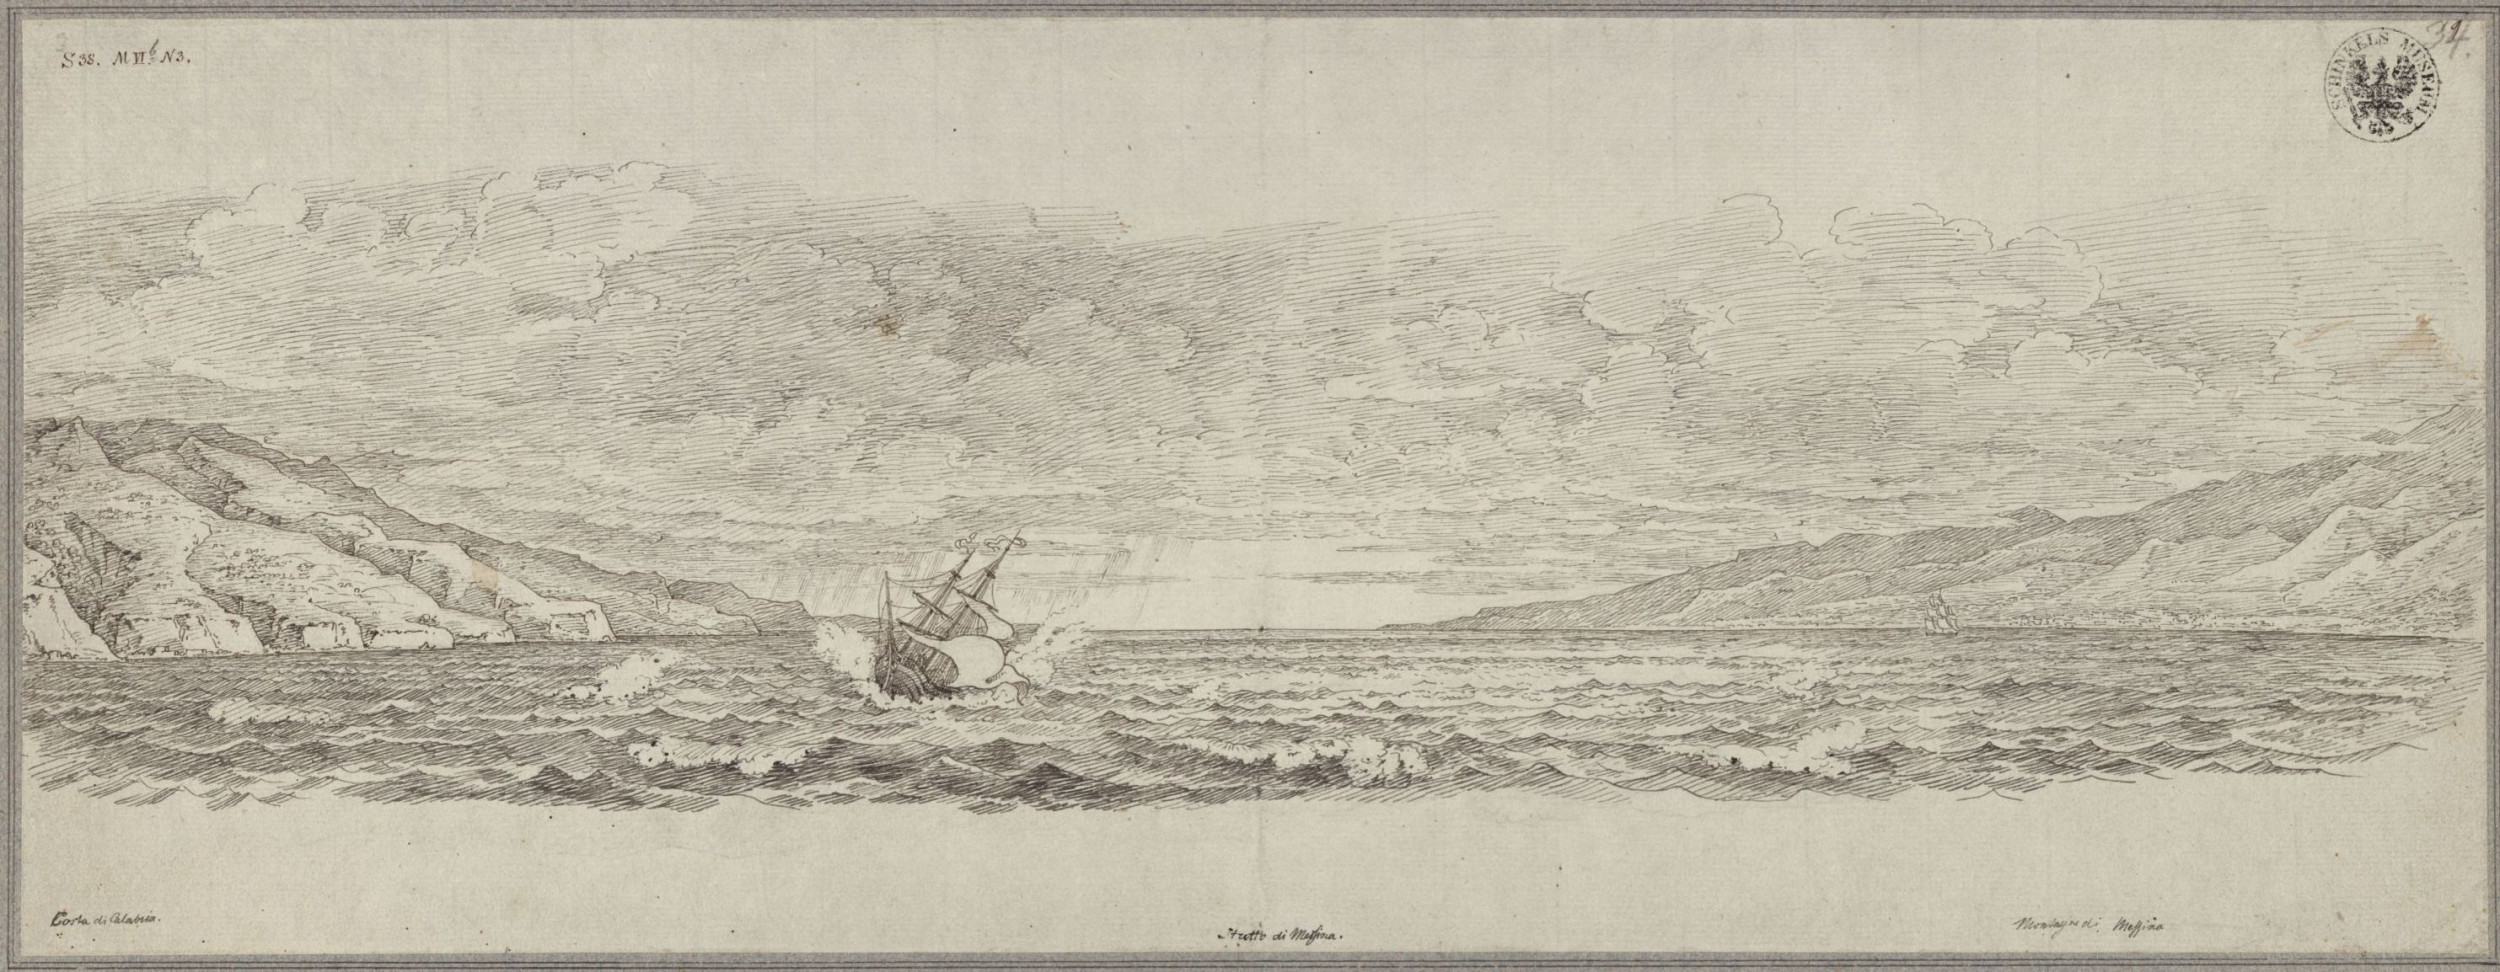 Strait of Messina, Scylla and Charybdis. Drawing by Karl Friedrich Schinkel